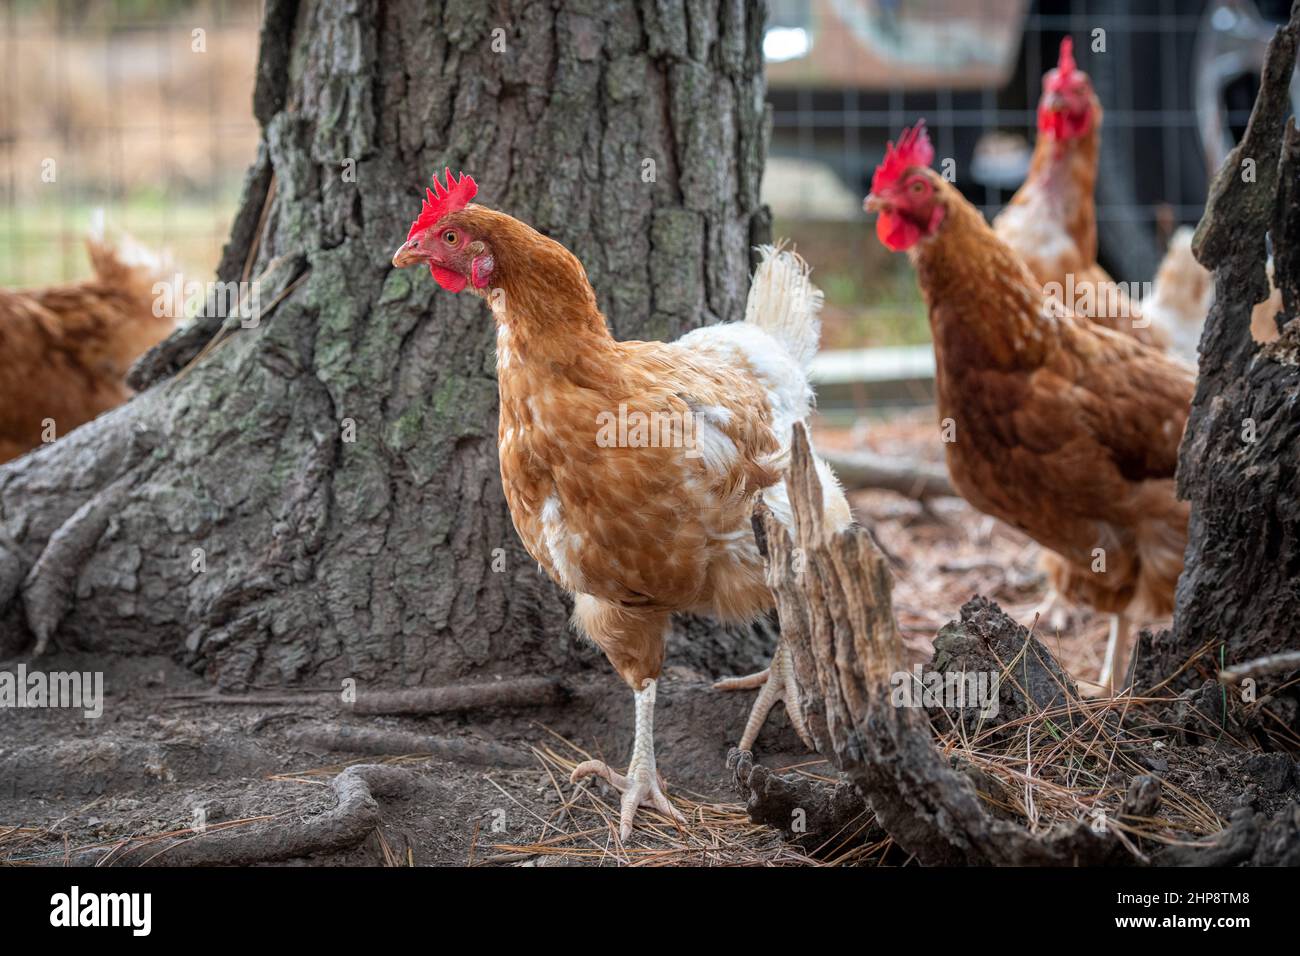 chickens in a chicken run Stock Photo